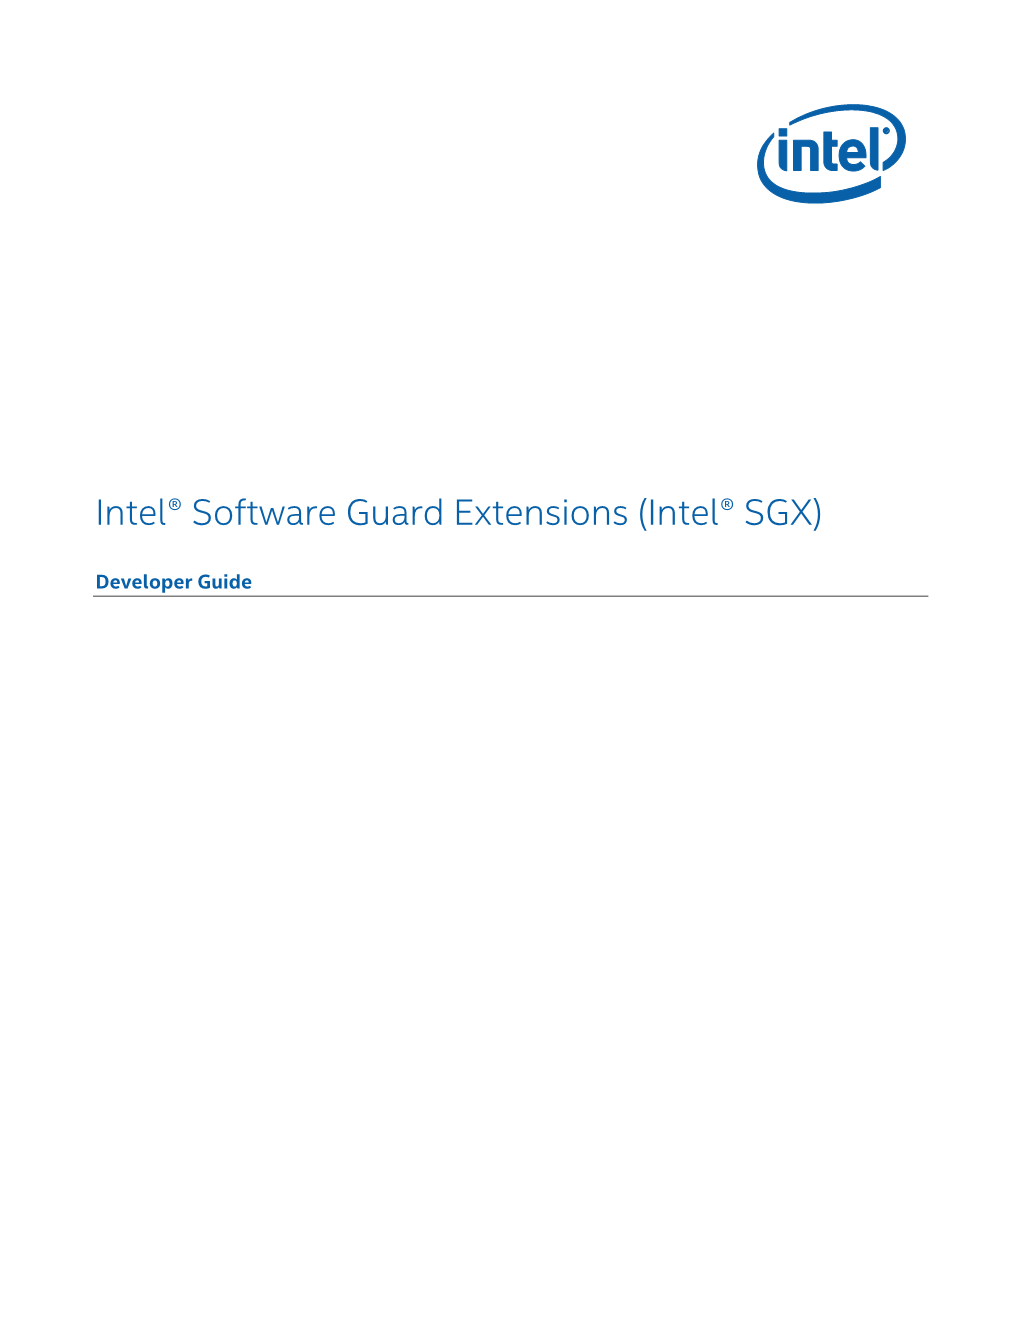 Intel(R) Software Guard Extensions Developer Guide